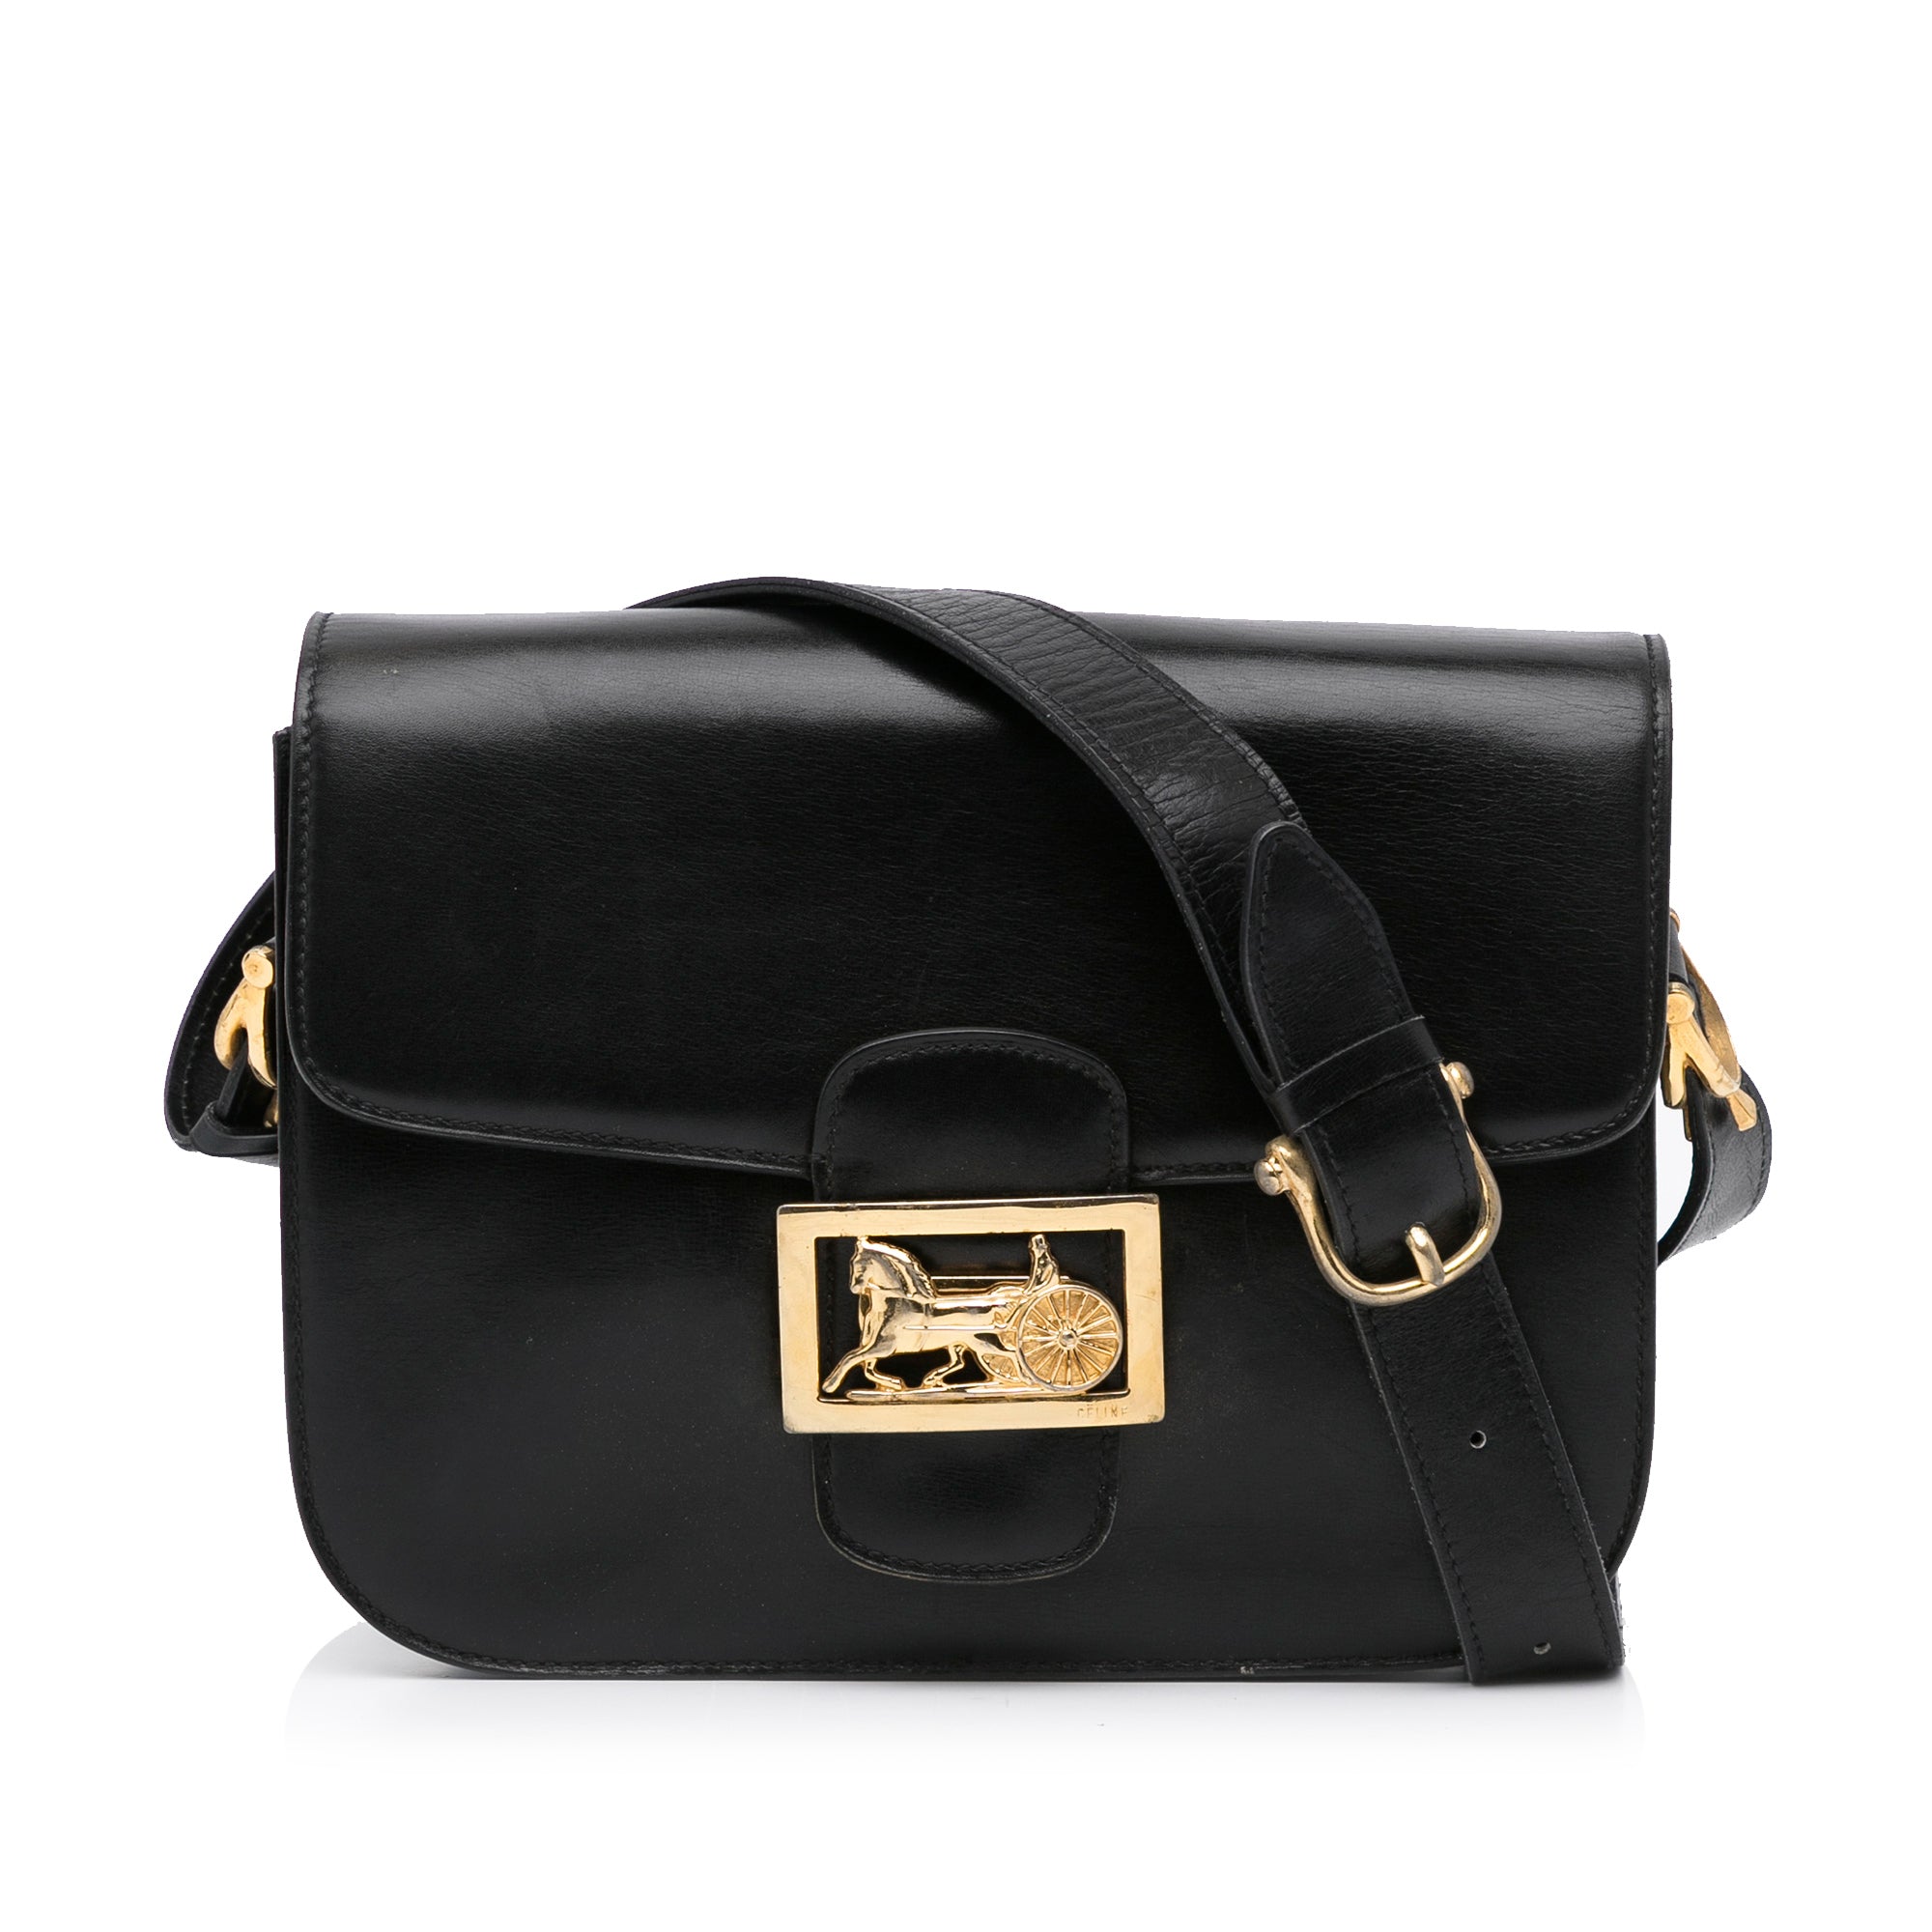 Celine - Authenticated Classic Handbag - Leather Black Plain for Women, Very Good Condition